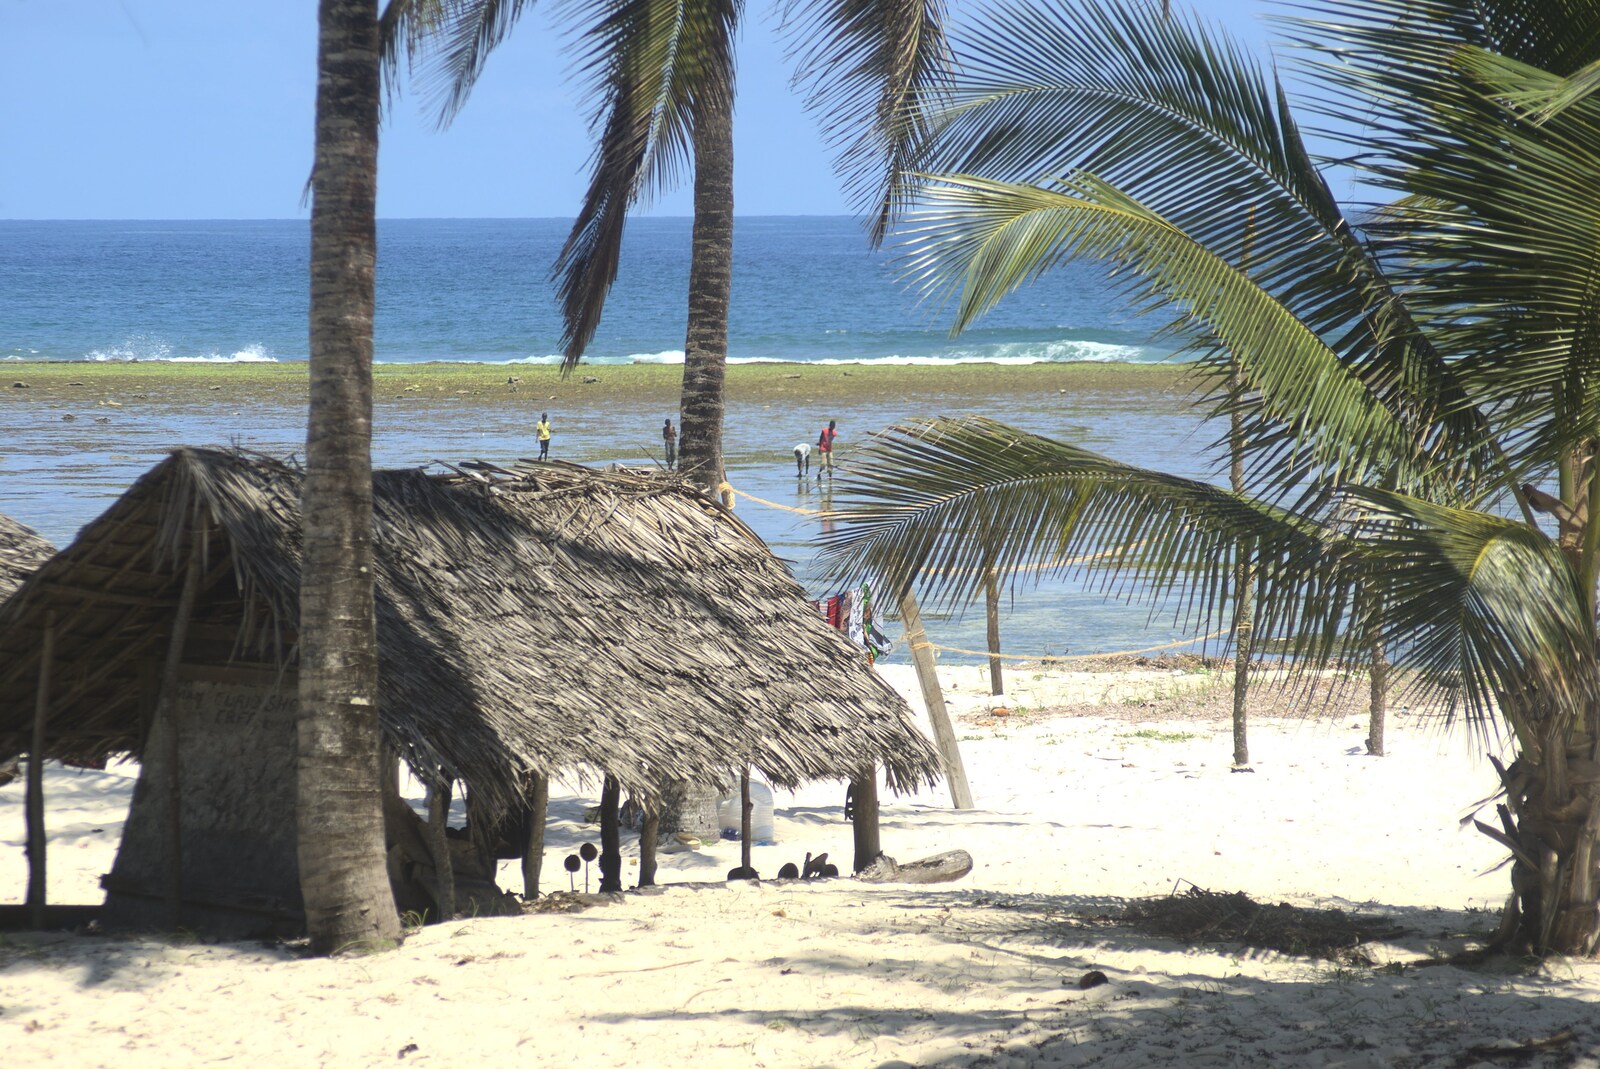 A thatched beach hut from Long Train (not) Runnin': Tiwi Beach, Mombasa, Kenya - 7th November 2010